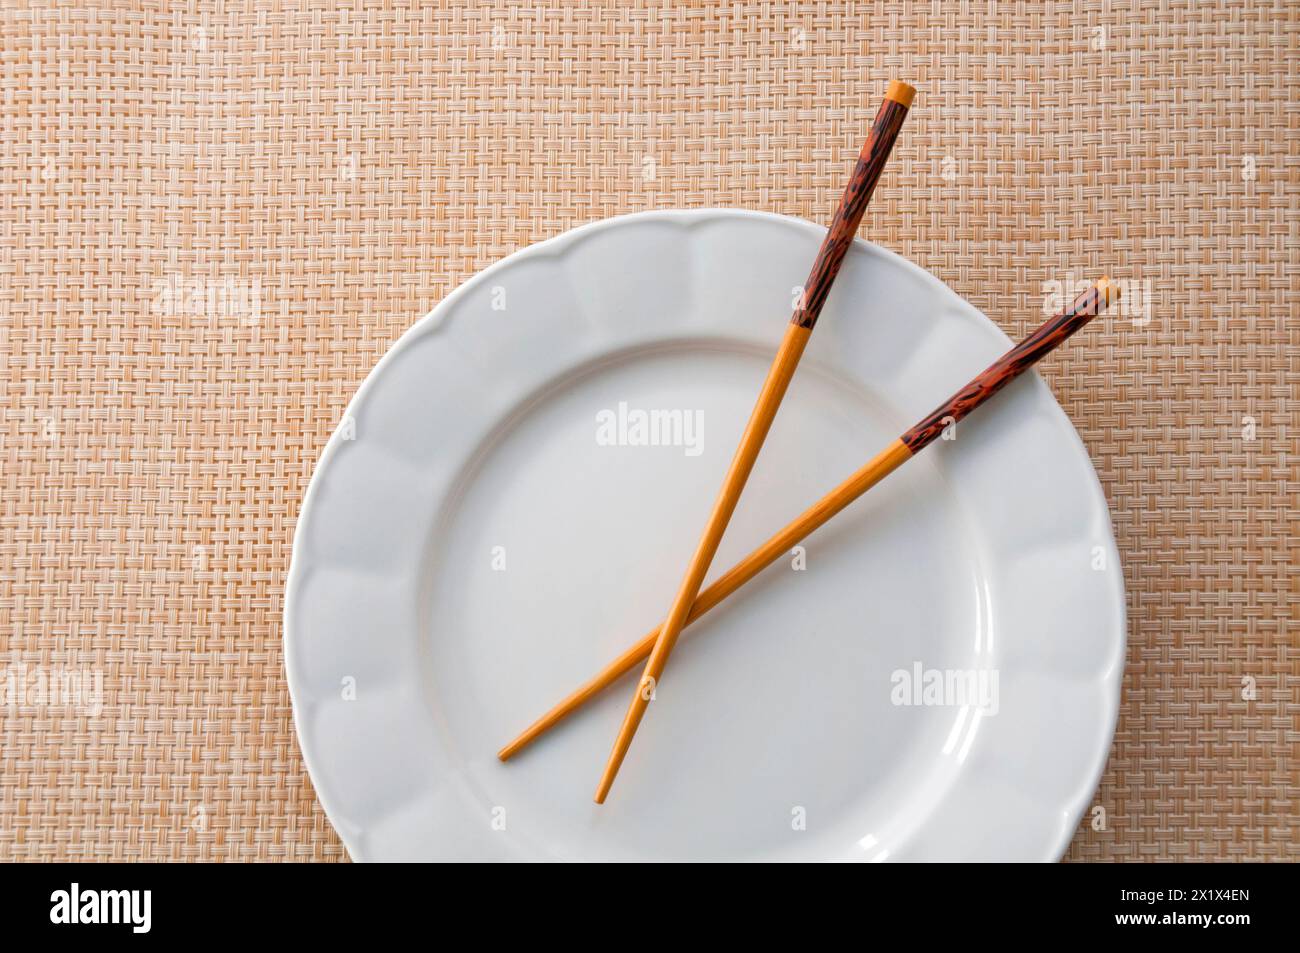 Chinese chopsticks on empty plate. Stock Photo